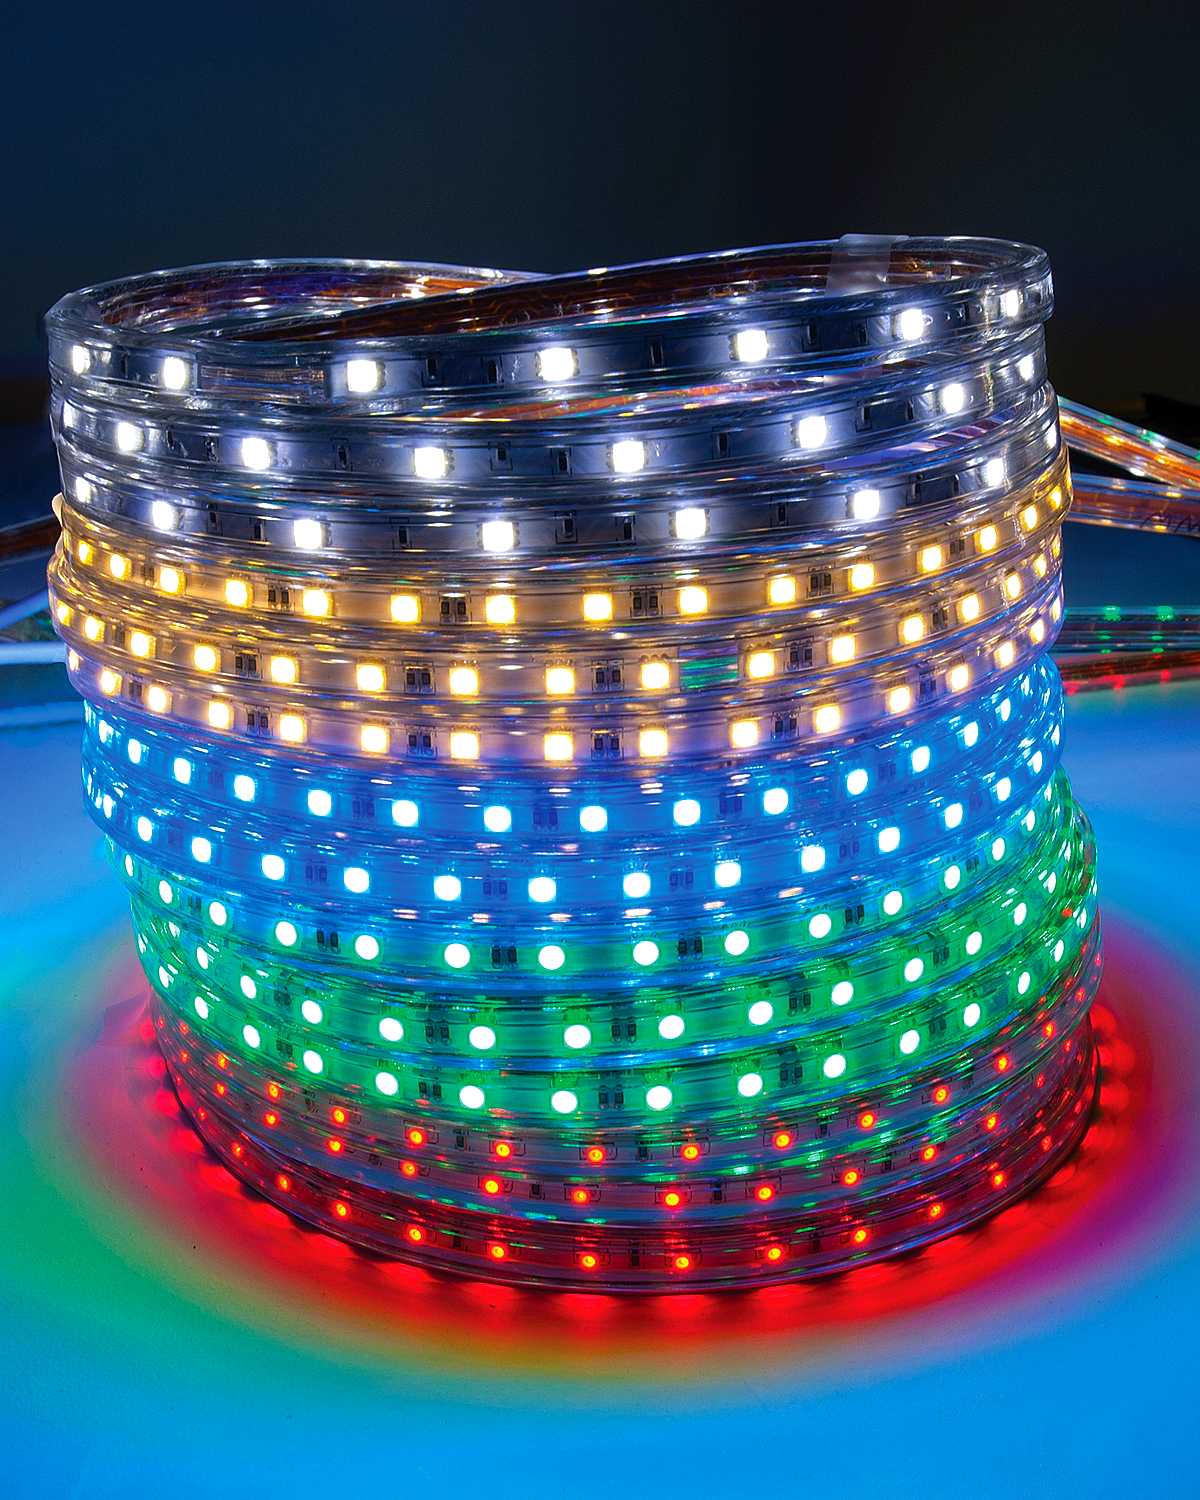 Outwater’s 120V RGB LED Ribbon Flex Lighting